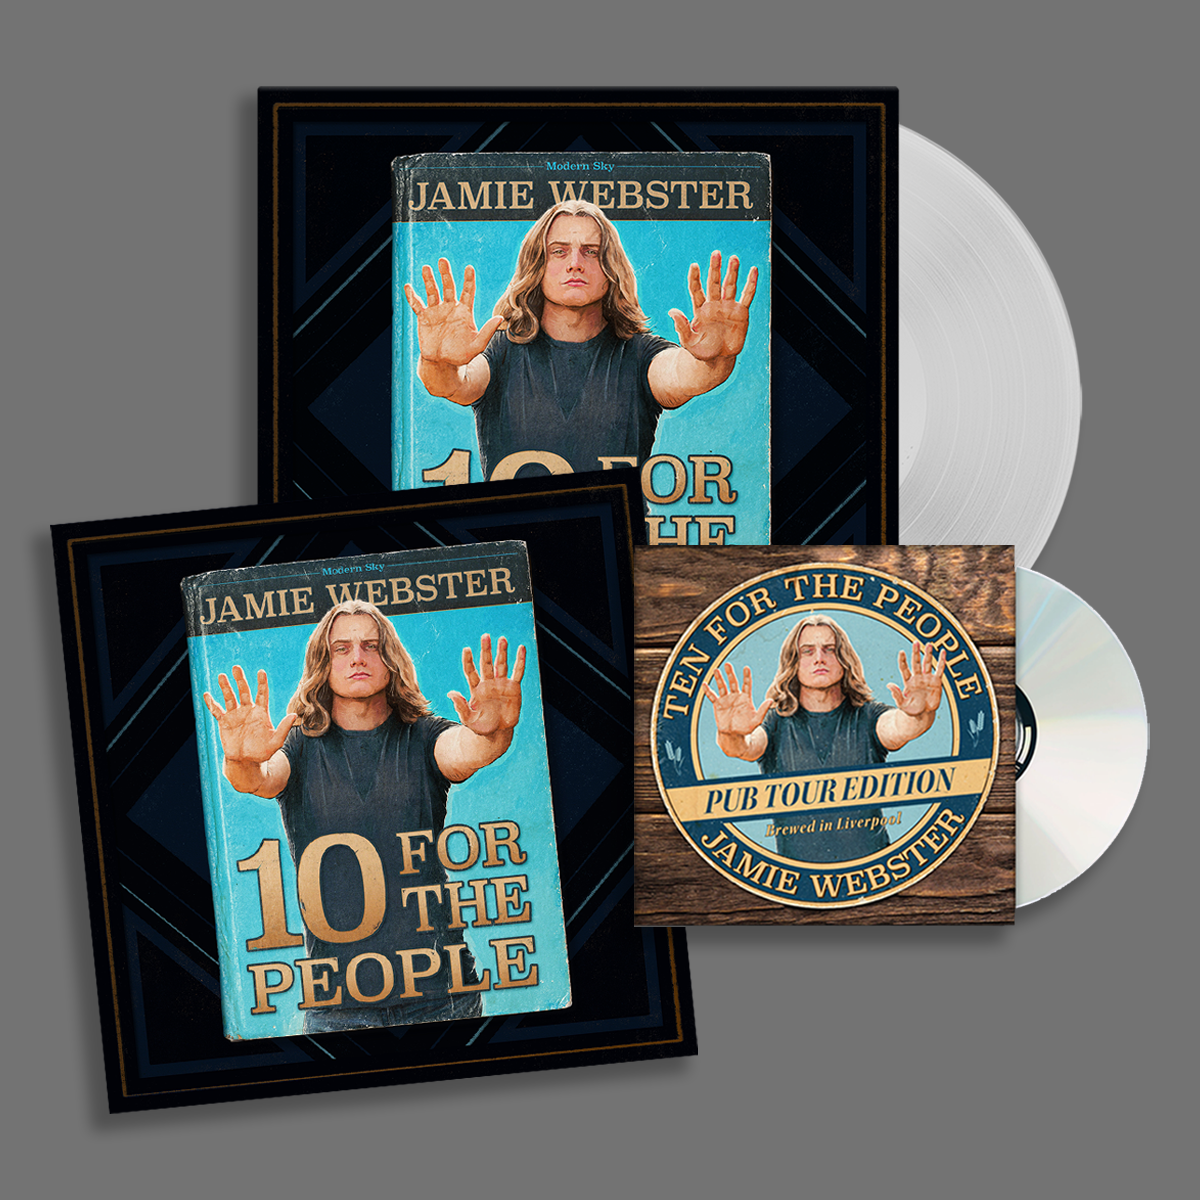 10 For The People: Exclusive Pub Tour CD, Transparent Clear Vinyl LP + Signed Print